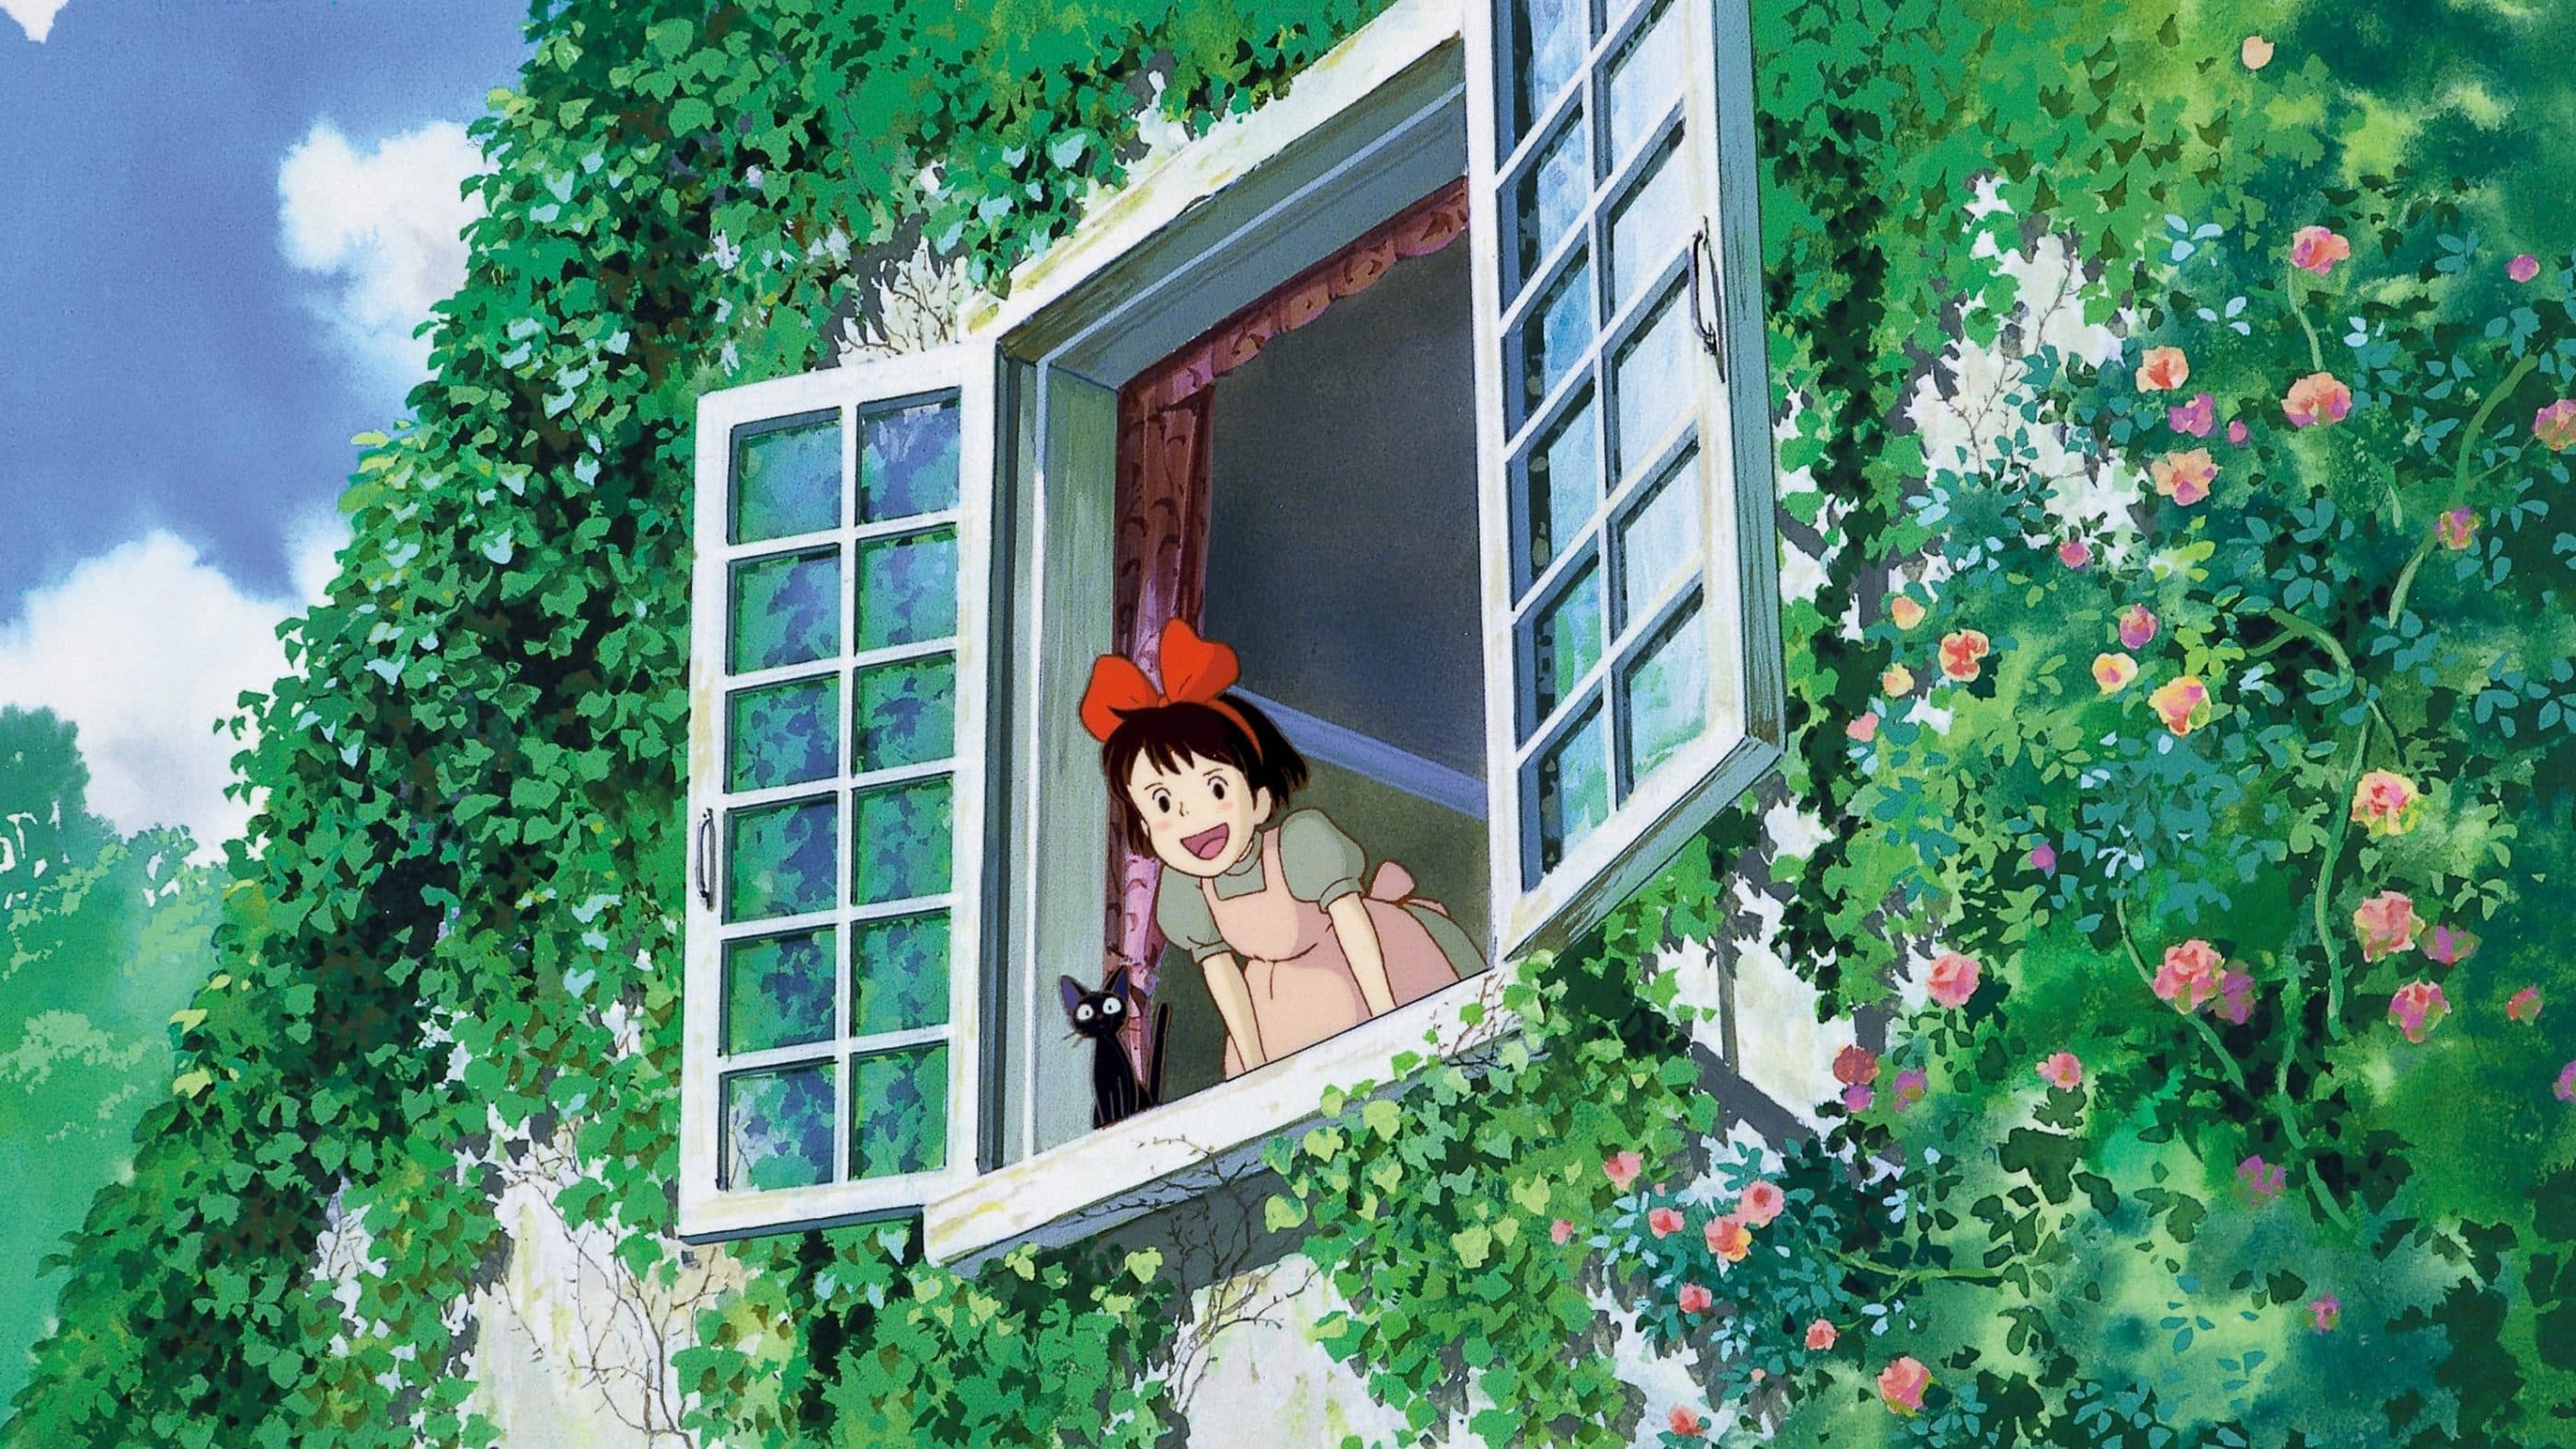 How Do You Live?: Hayao Miyazaki's final Studio Ghibli film is coming